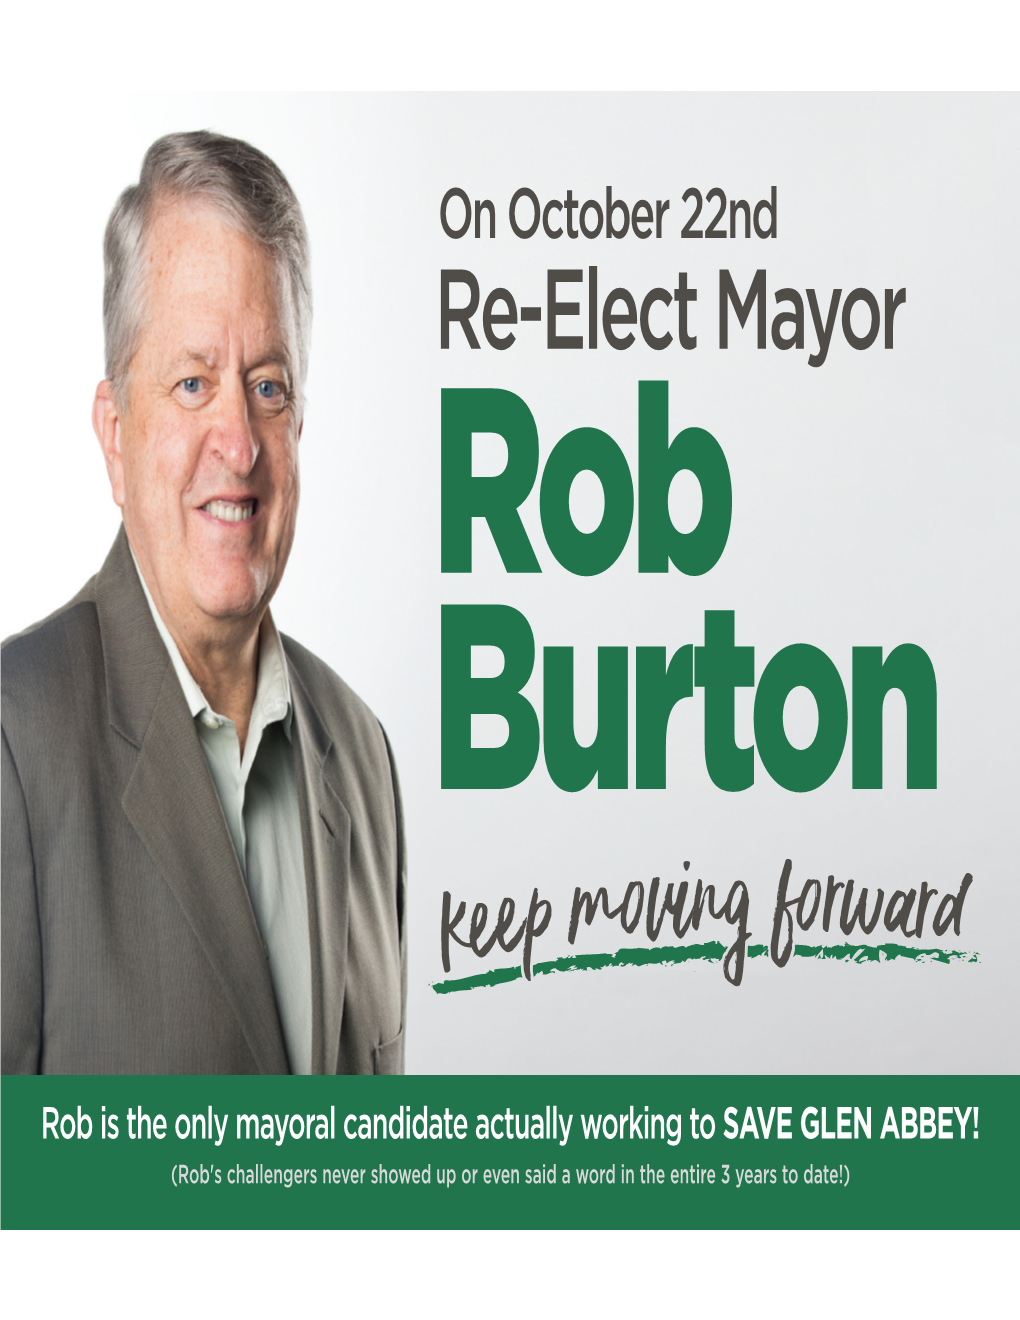 Re-Elect Mayor Rob Burton